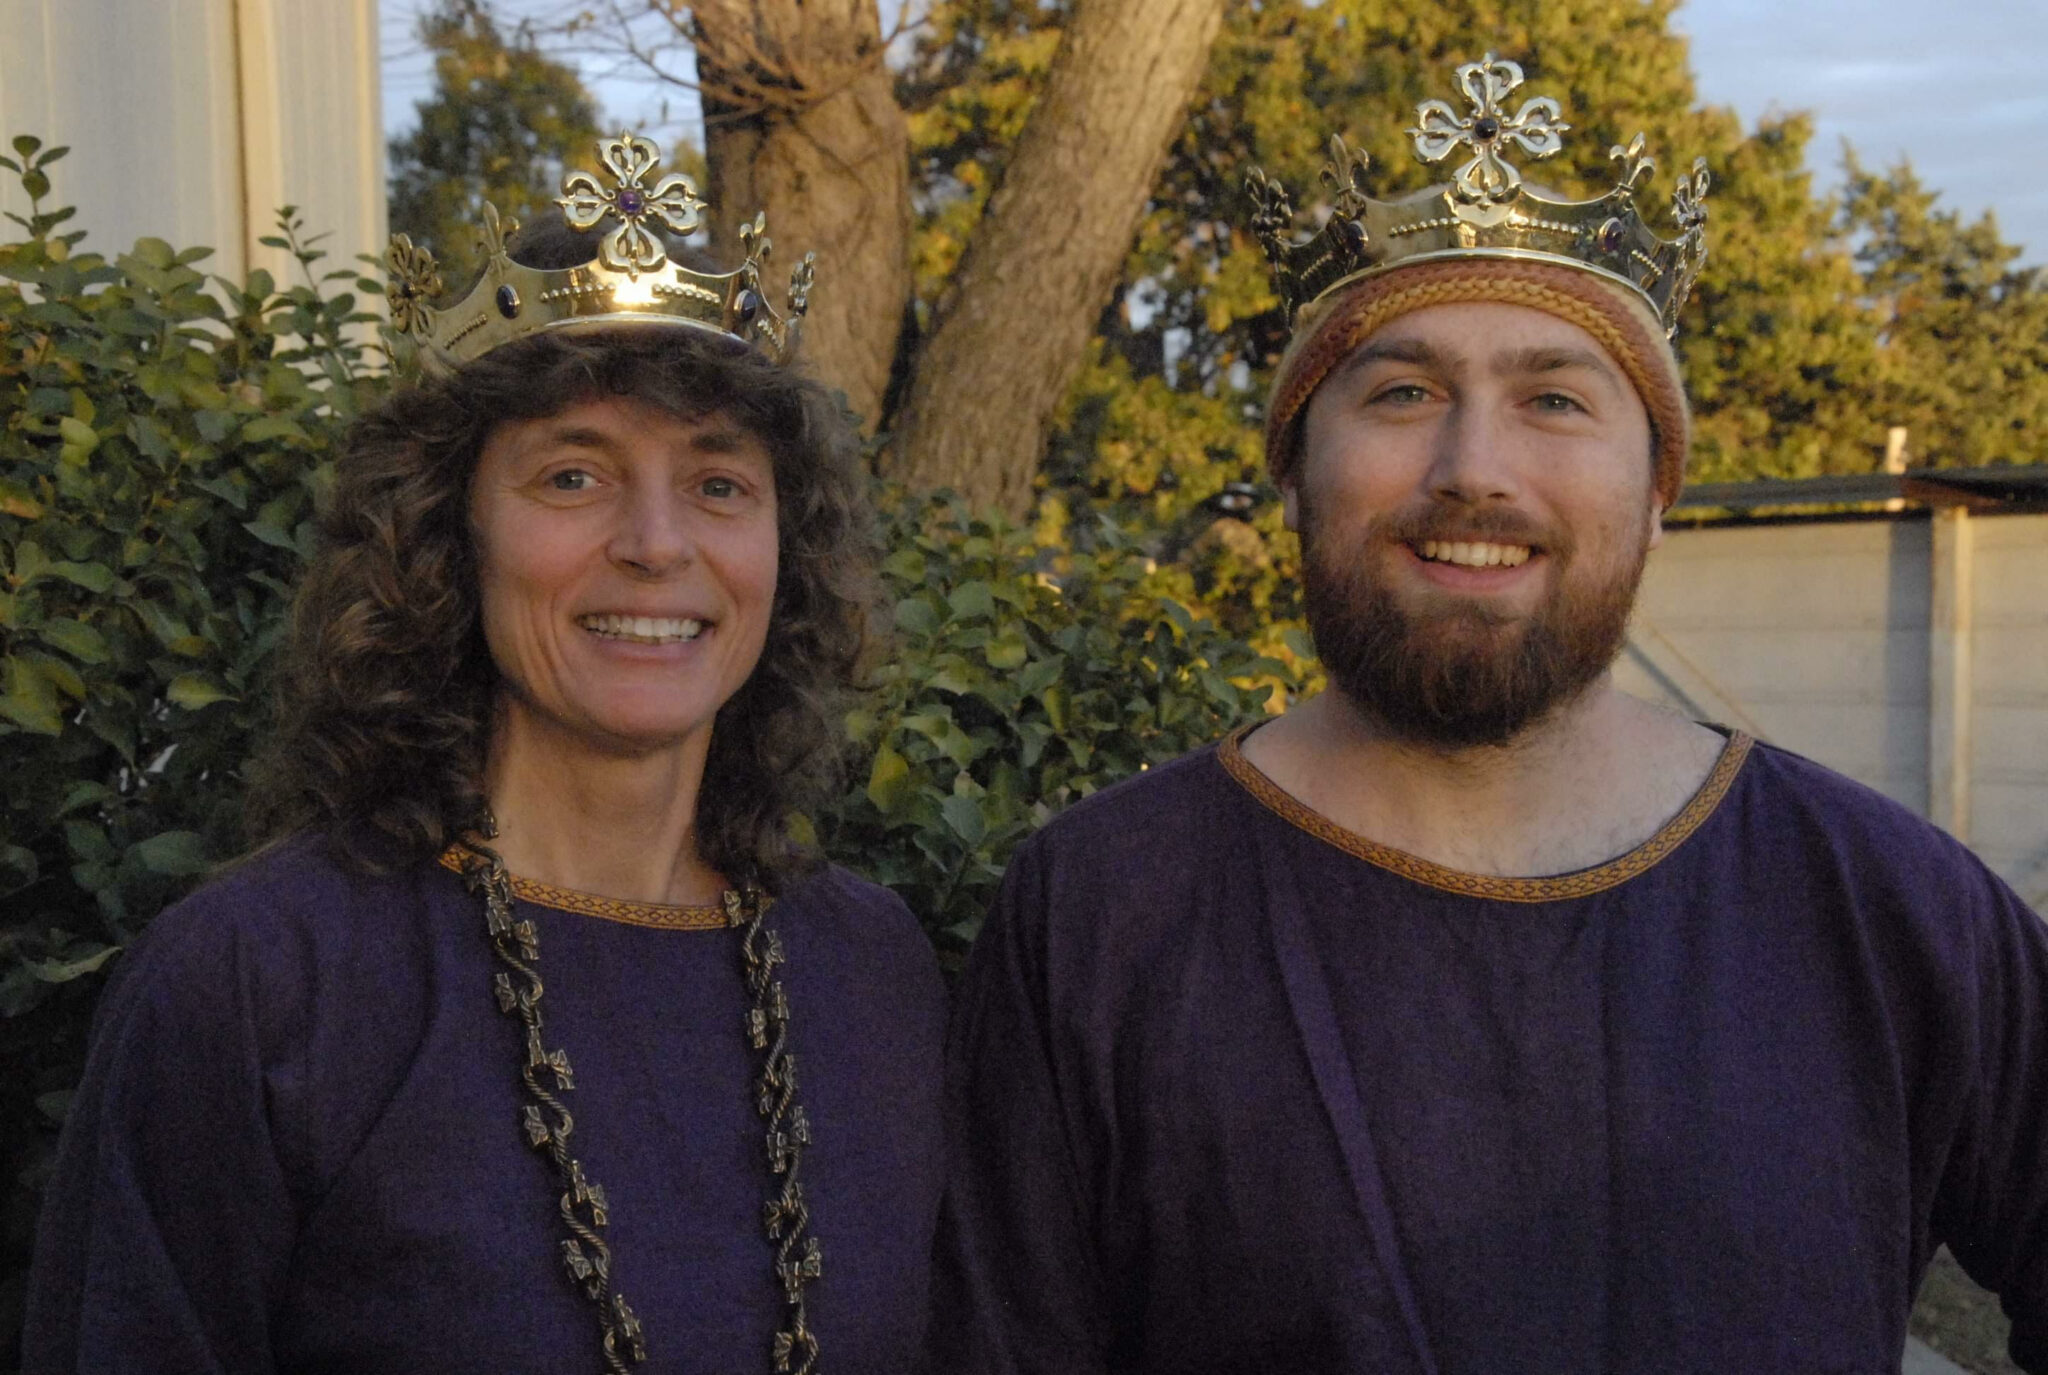 Their Royal Majesties, David and Rhianwen. Image courtesy of the Kingdom Webpage